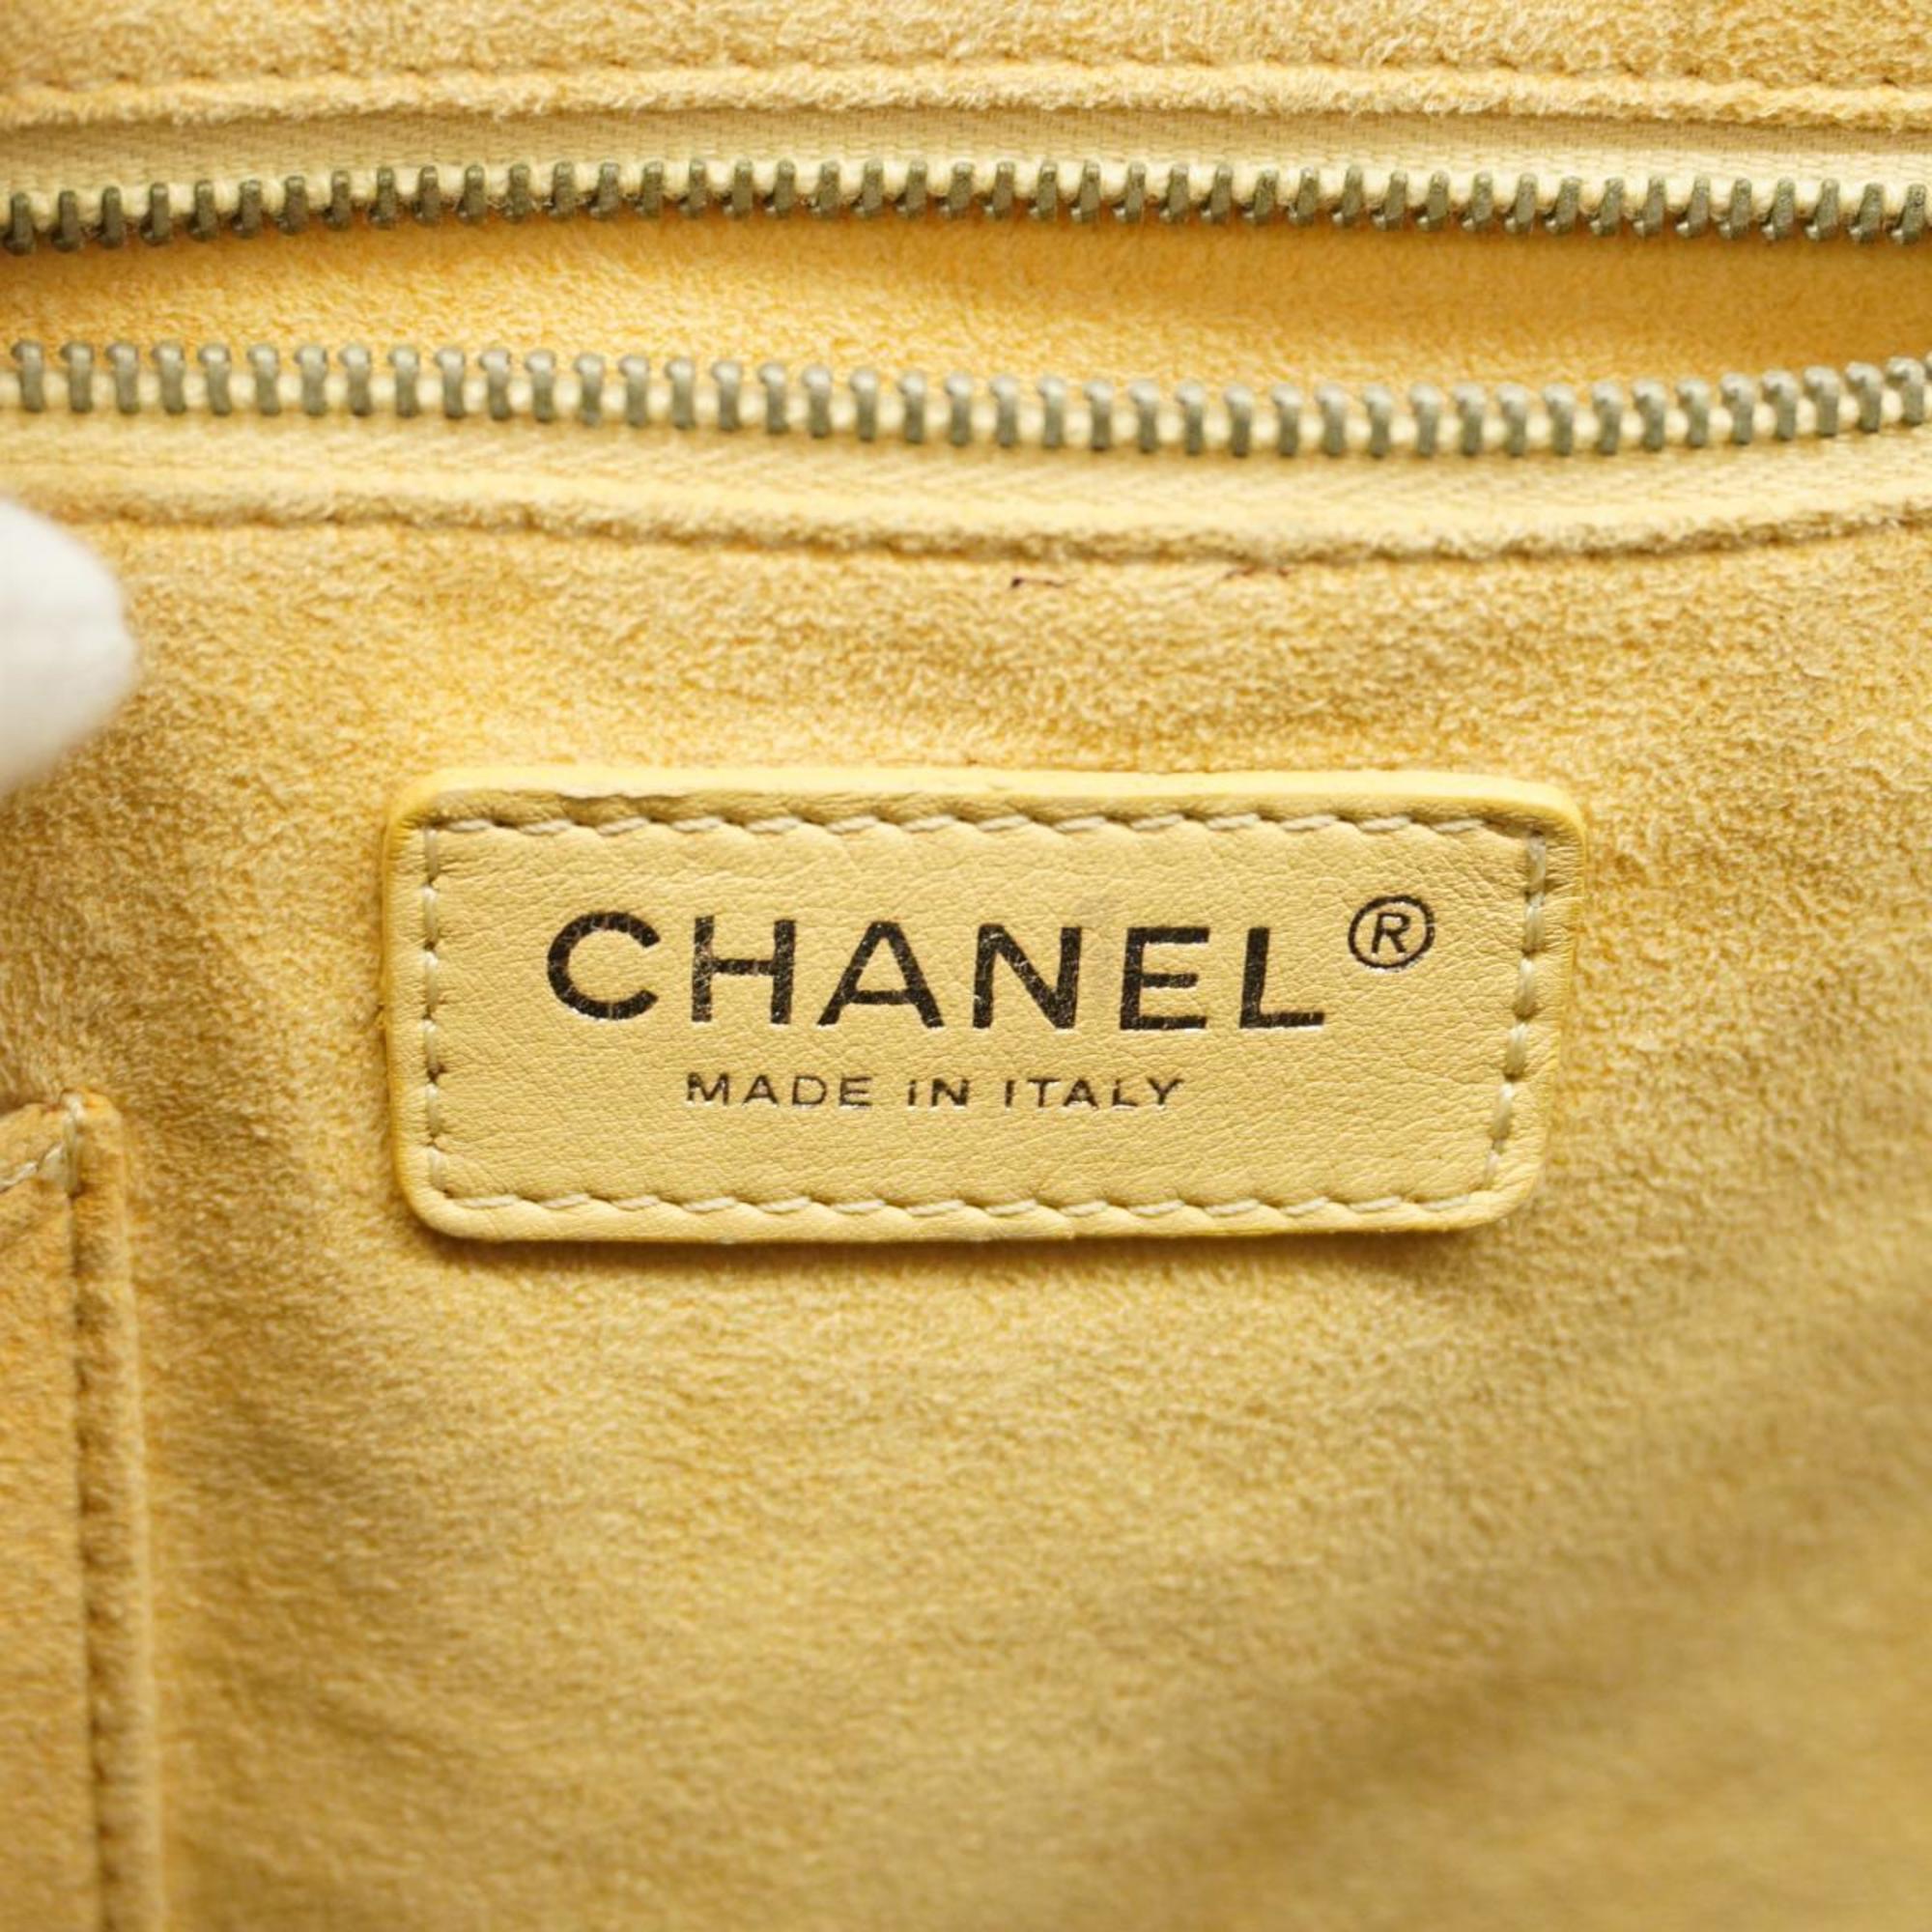 Chanel Handbag No.5 Patent Leather Black Women's